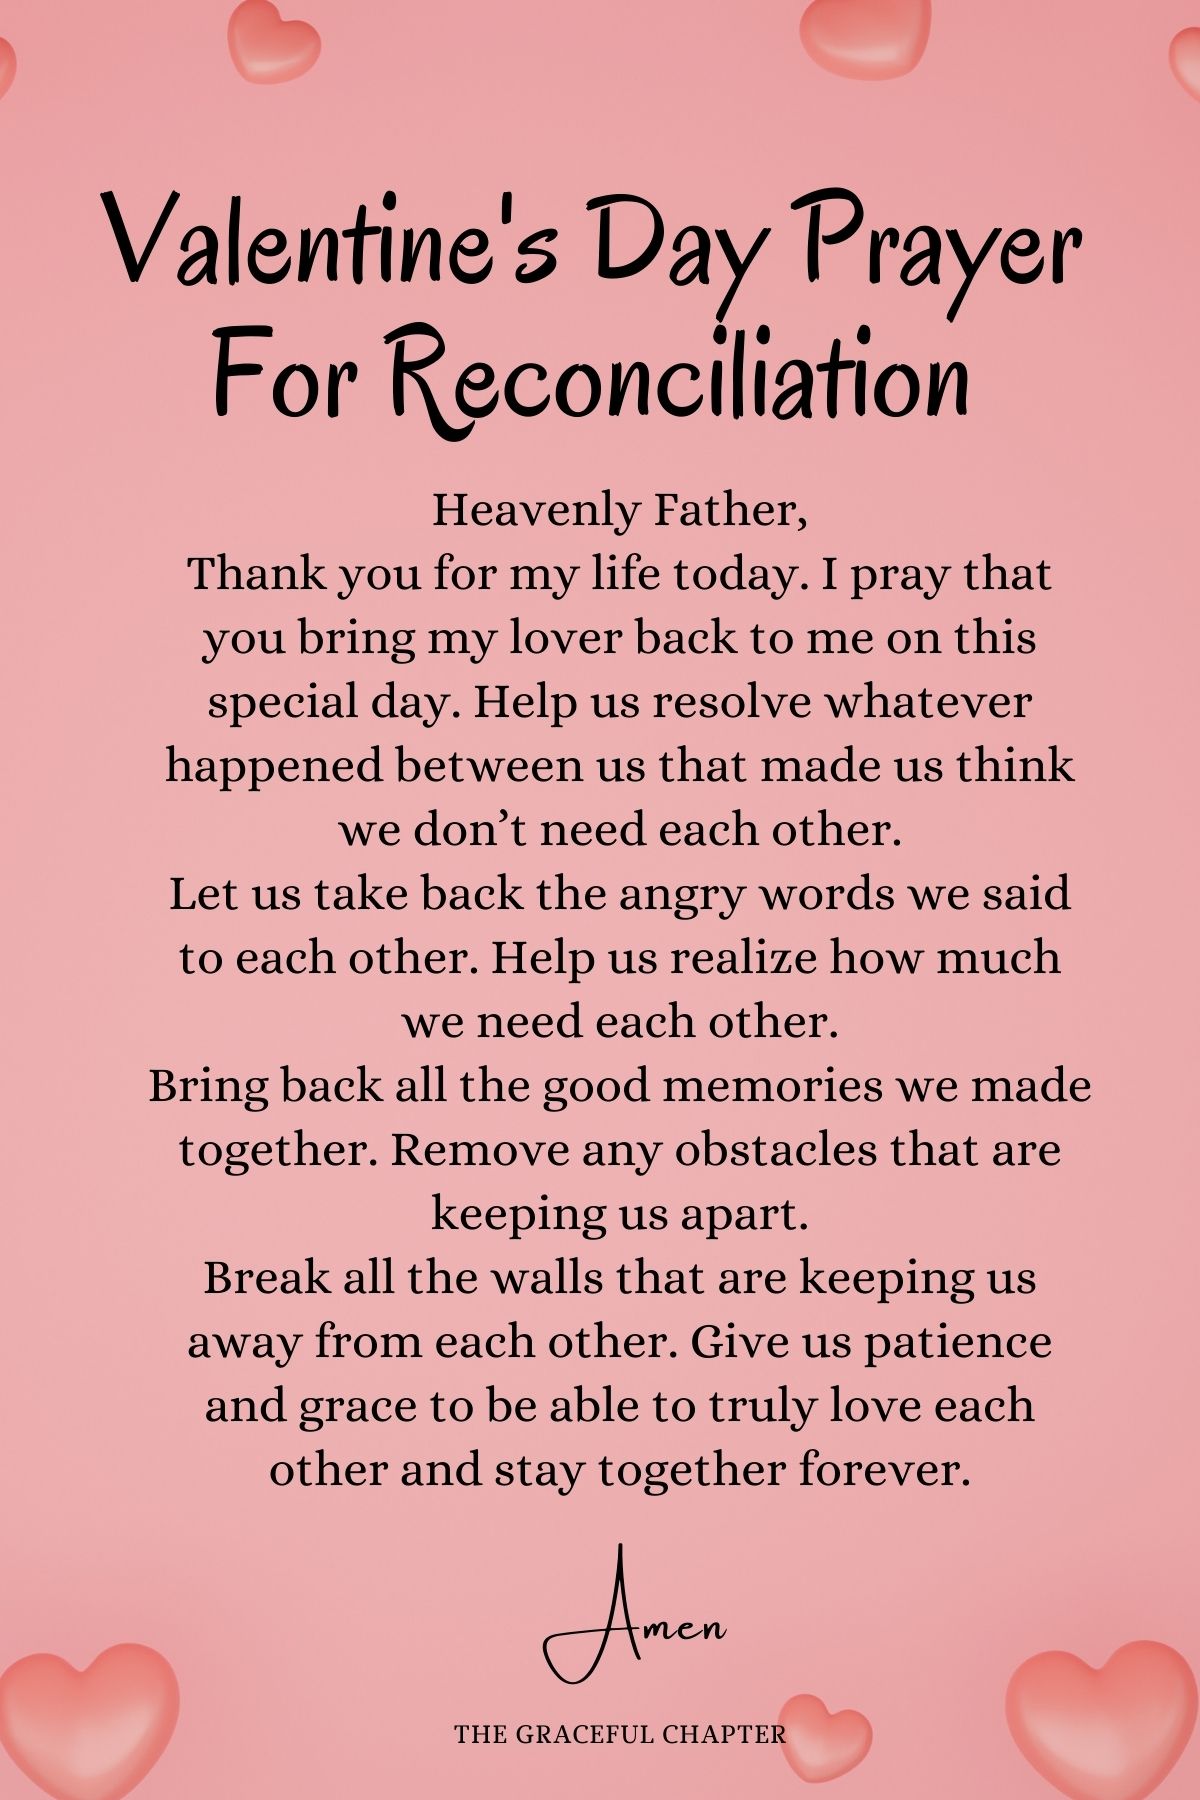 Valentine's day prayer for reconciliation